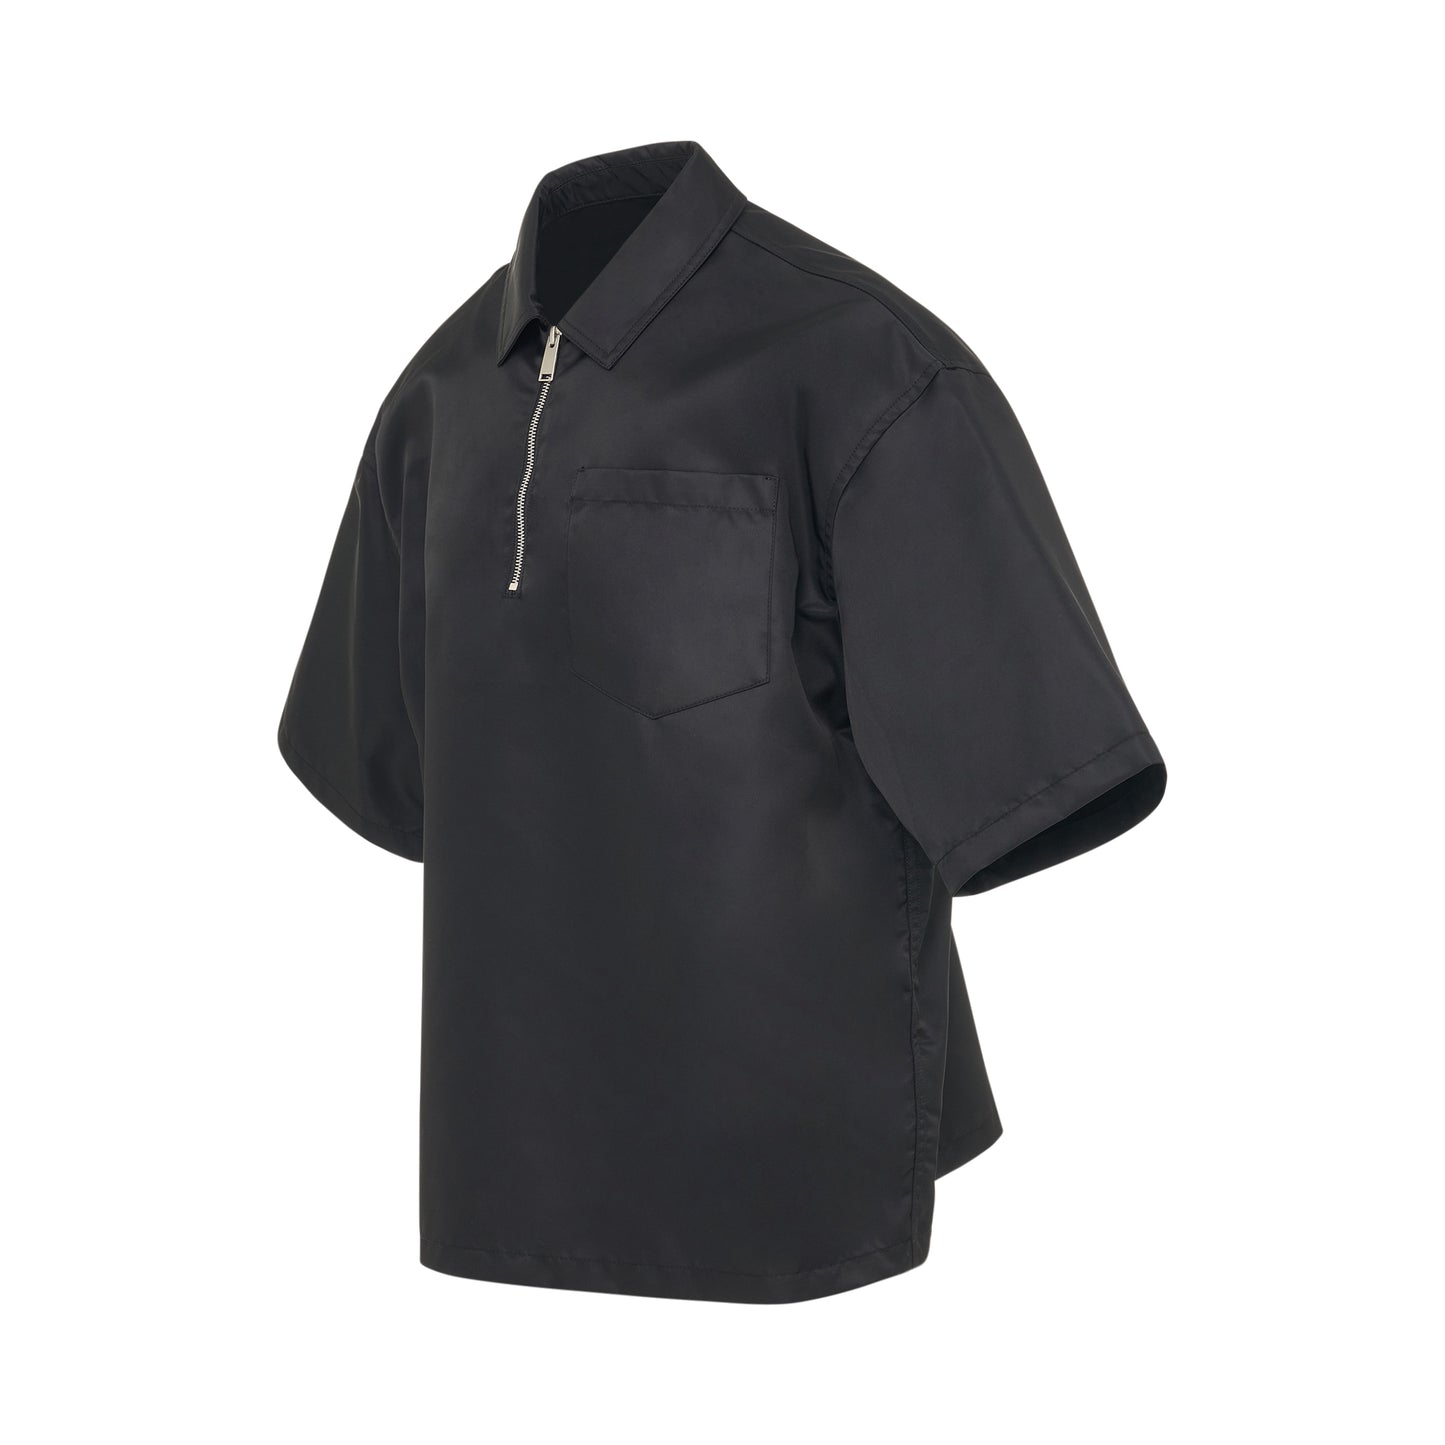 Ex-Ray Nylon Zip Short Sleeve Shirt in Black